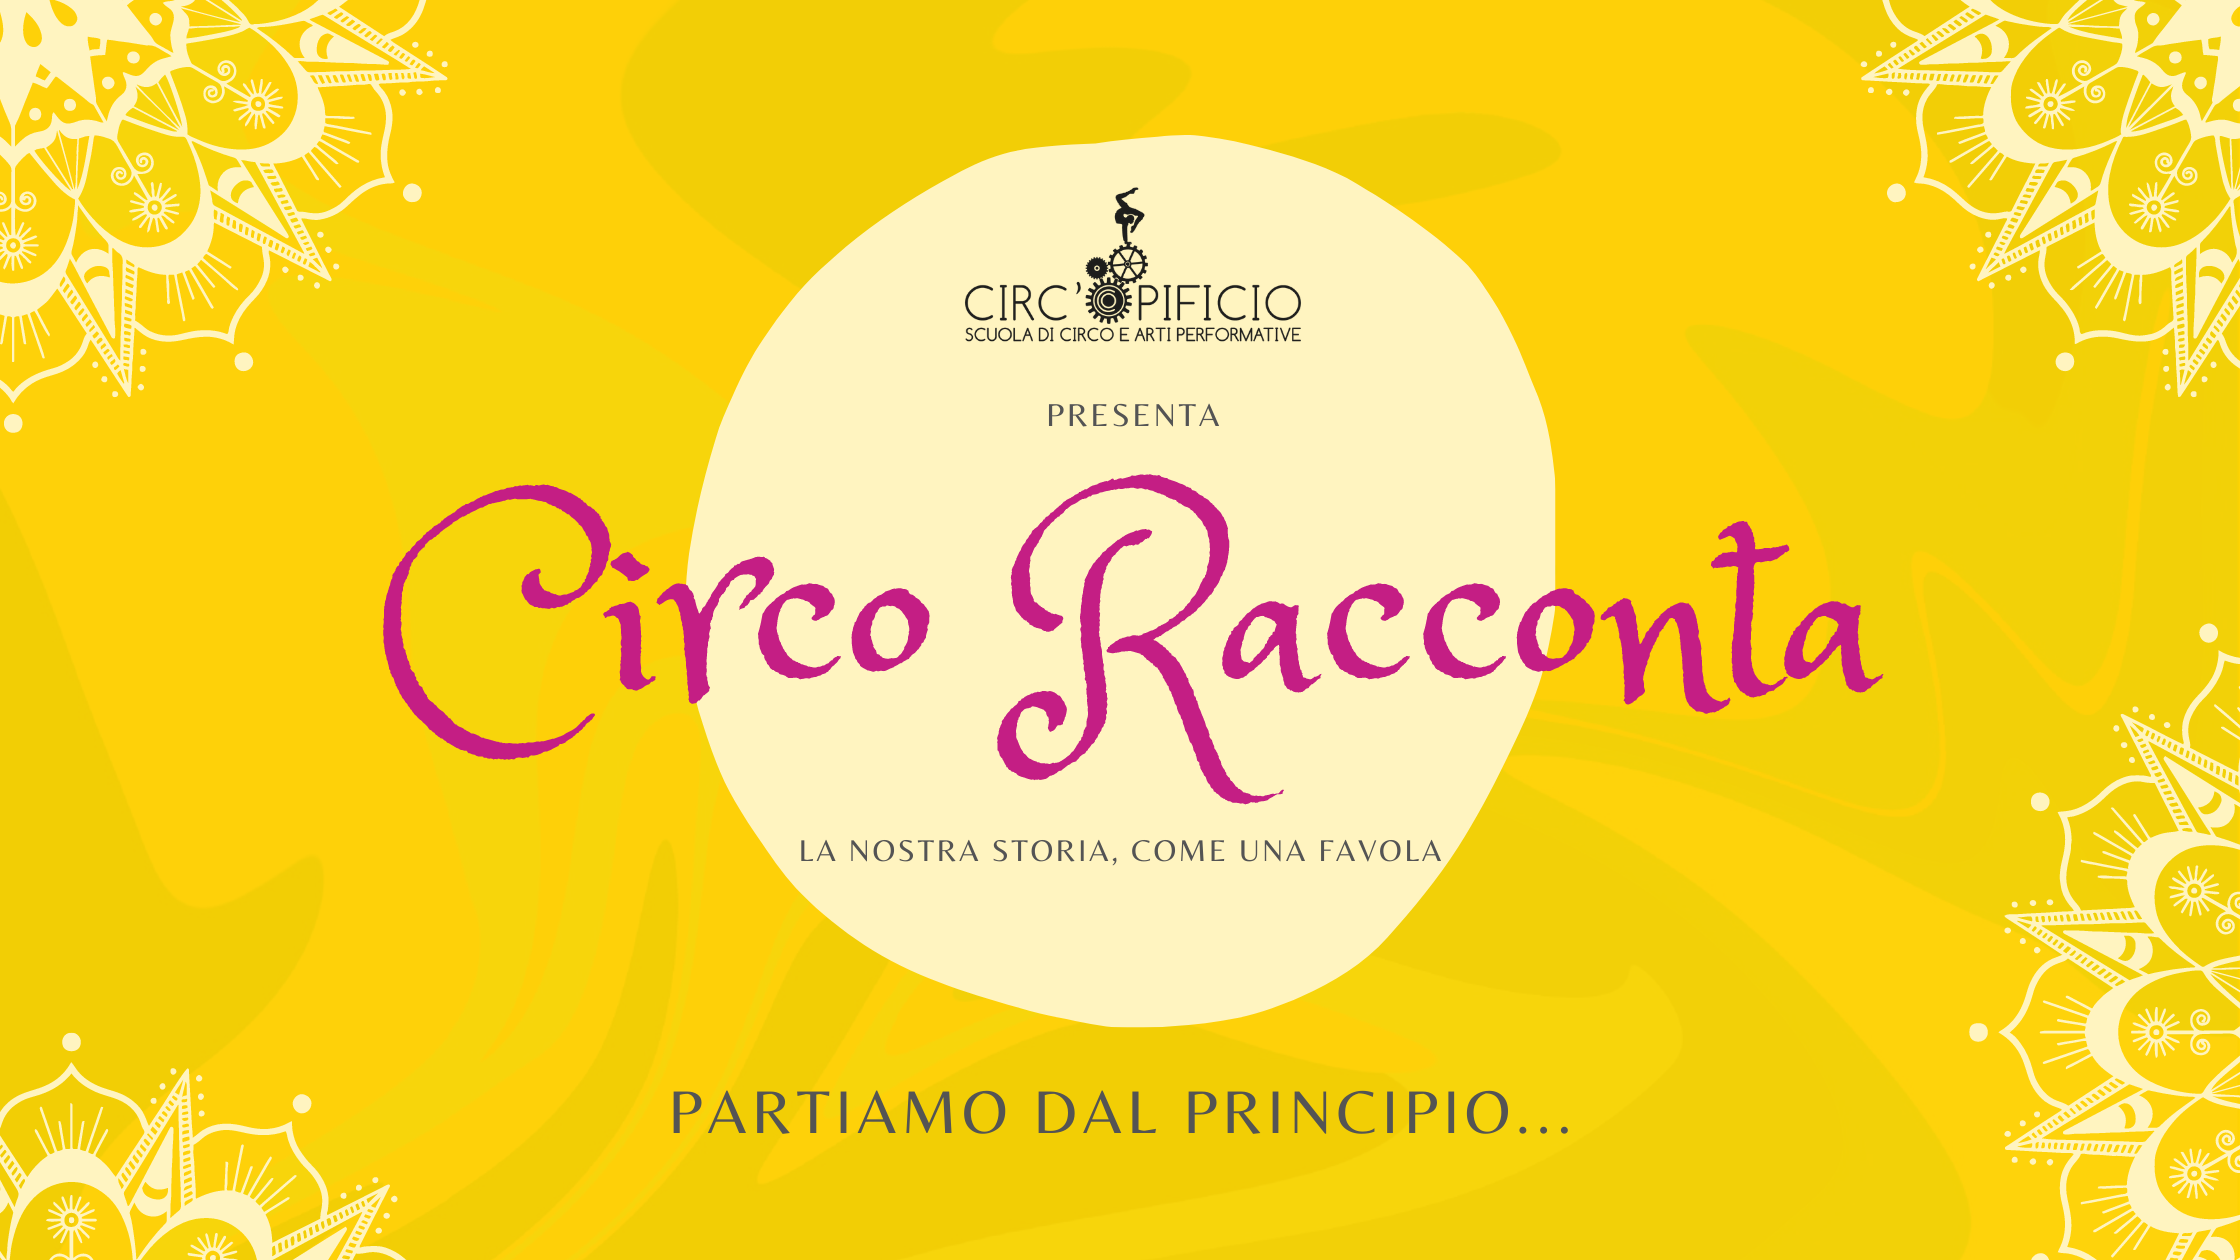 http://www.circopificio.it/wp-content/uploads/2020/11/Circo-Racconta-1.png